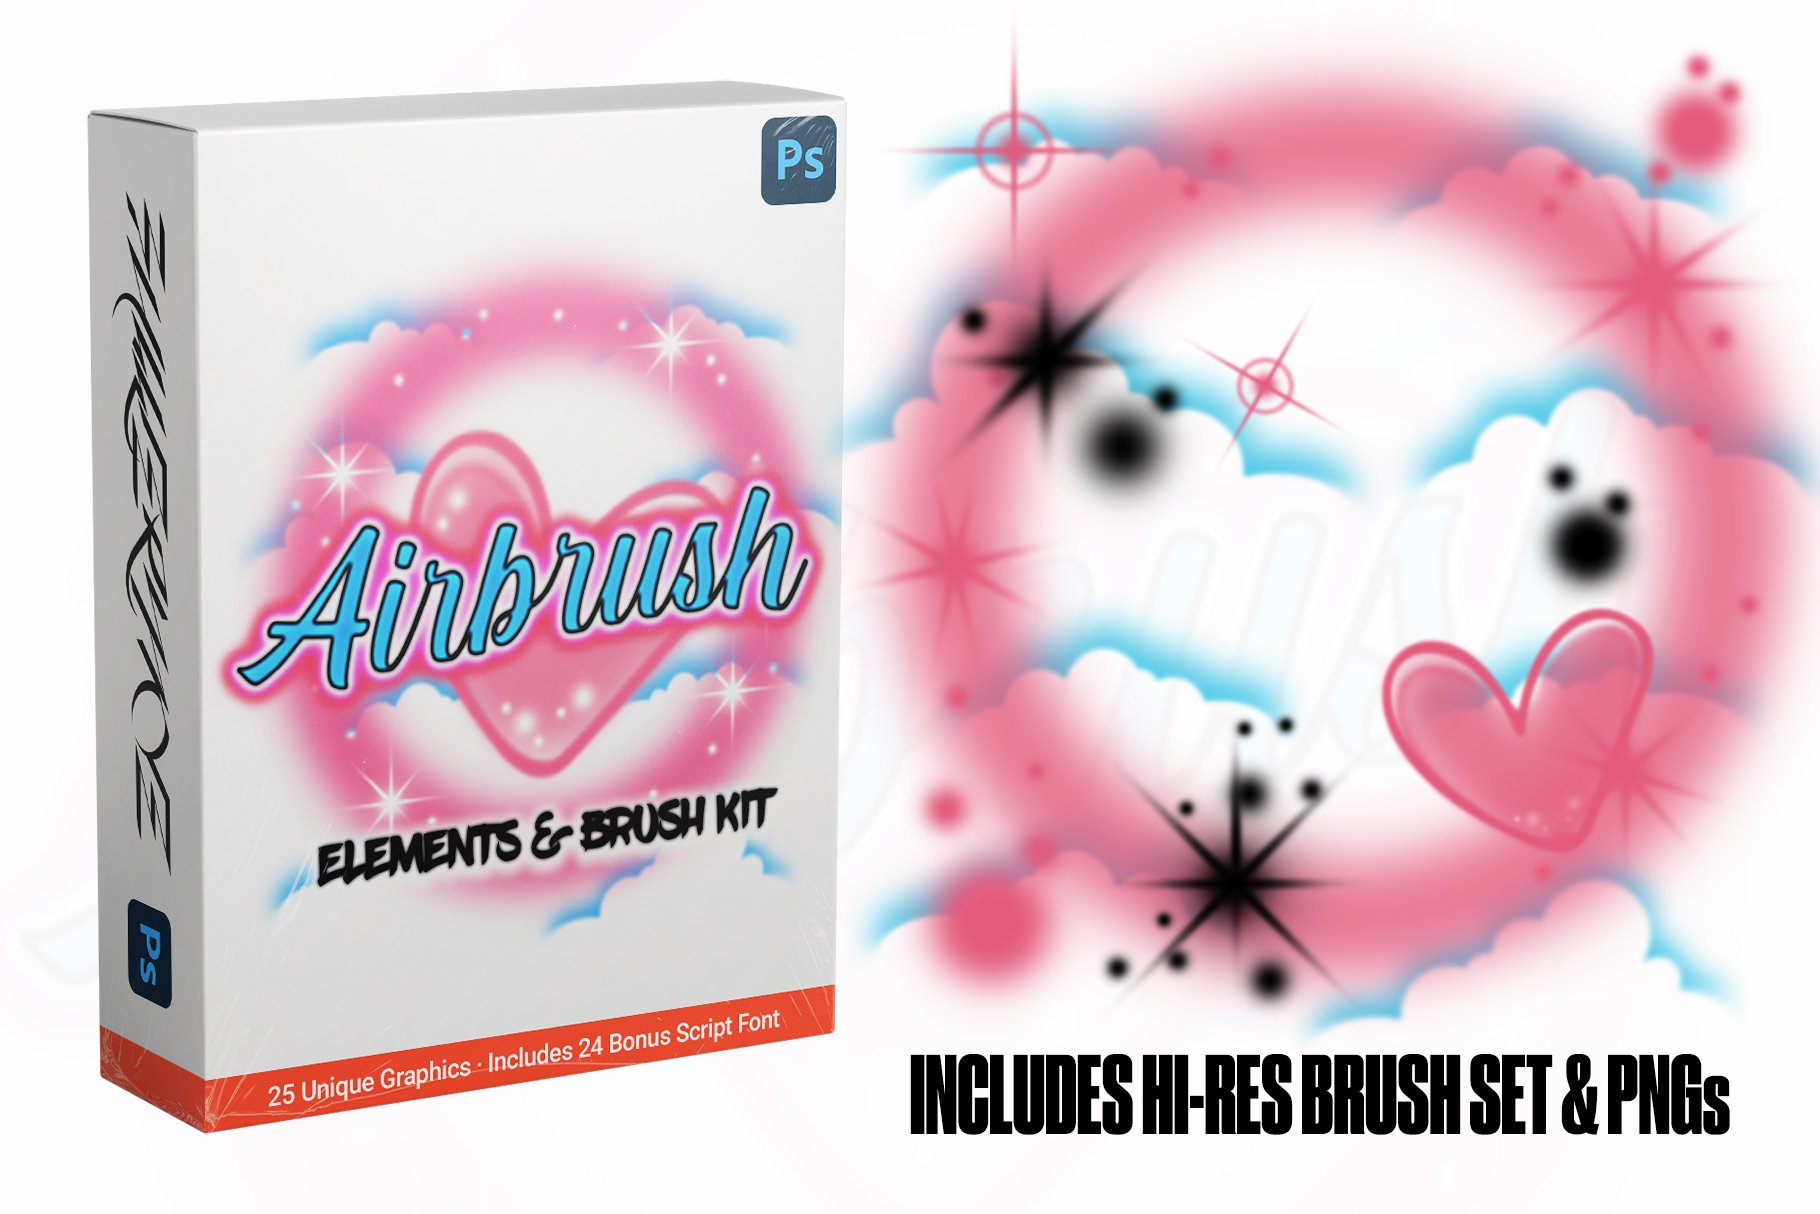 Airbrush Elements & Brush Kitcover image.